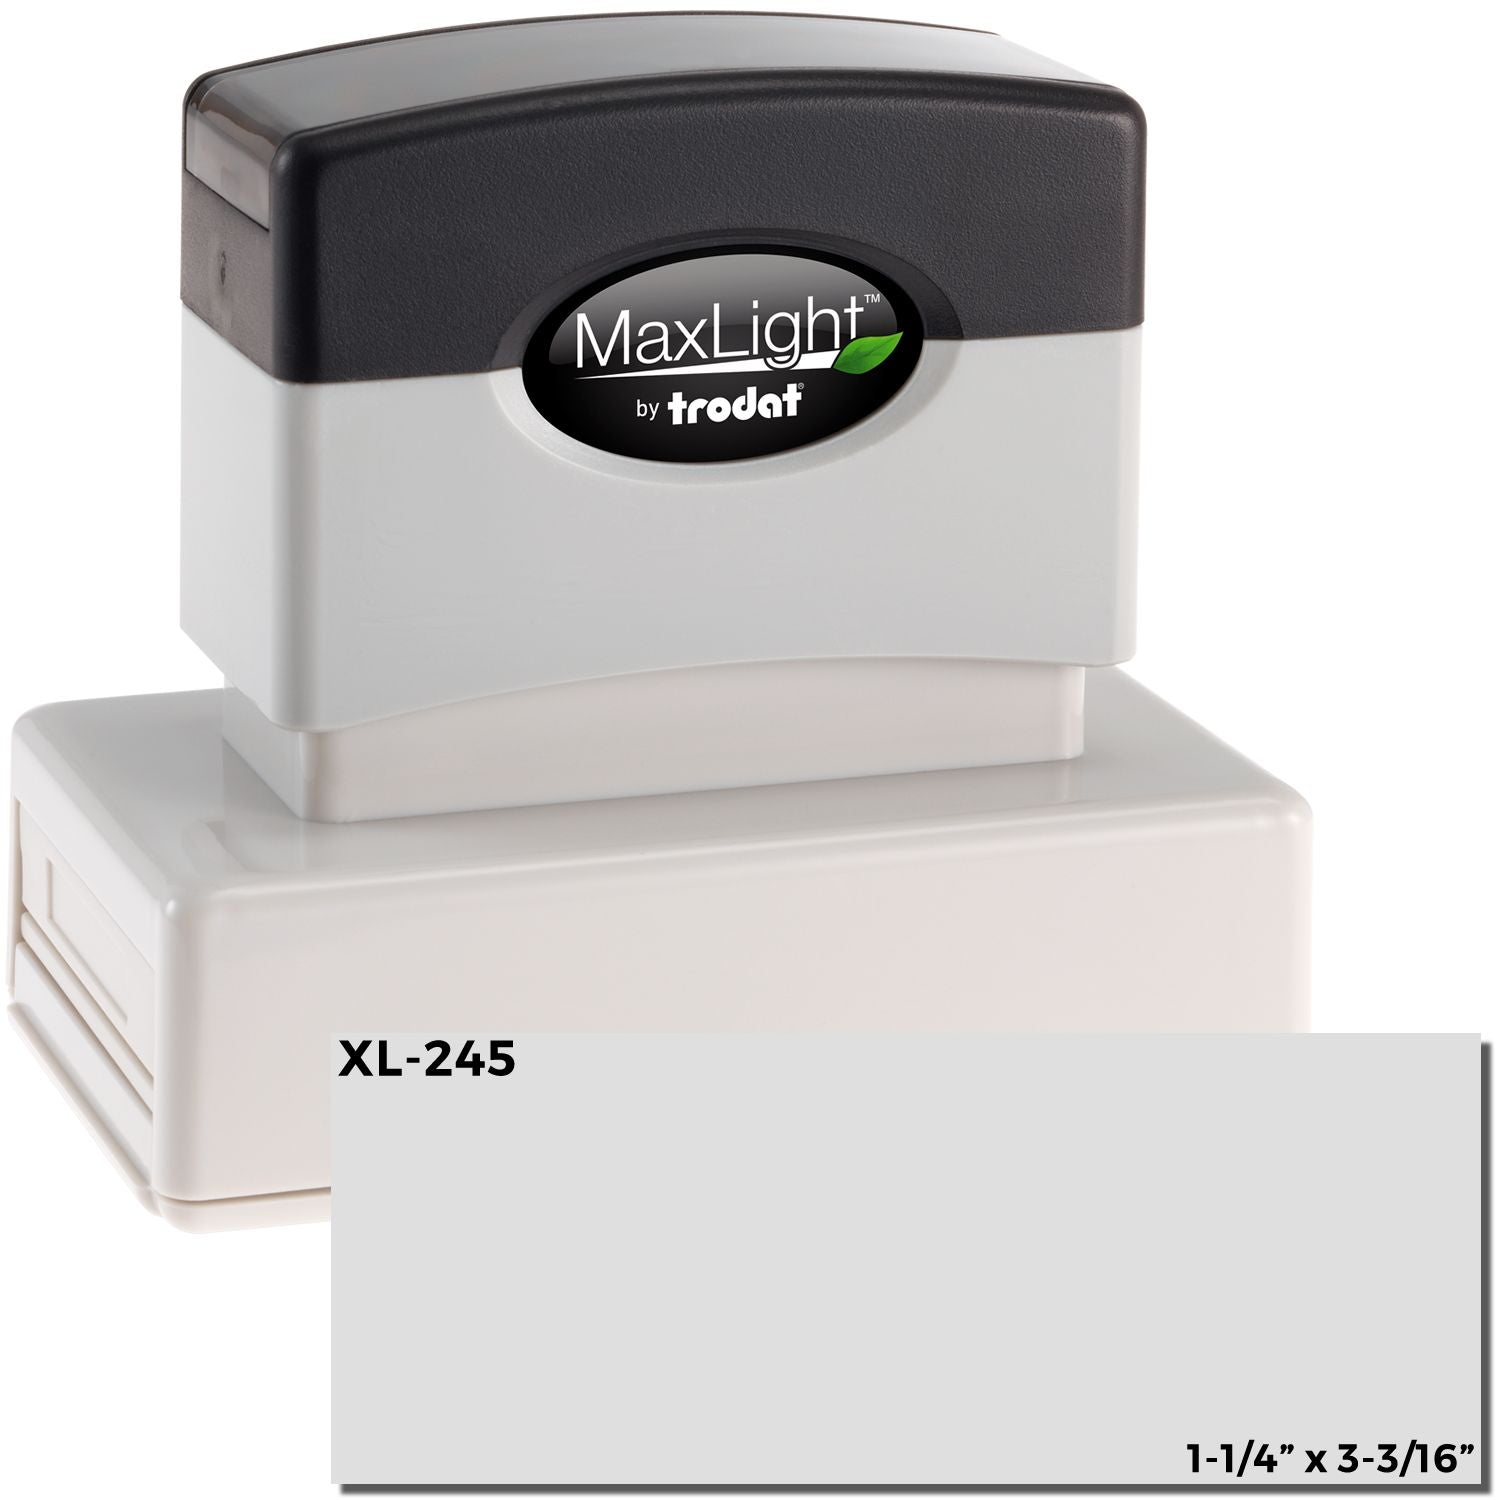 Maxlight Xl2 245 Pre Inked Stamp 1 1 4 X 3 3 16 Main Image